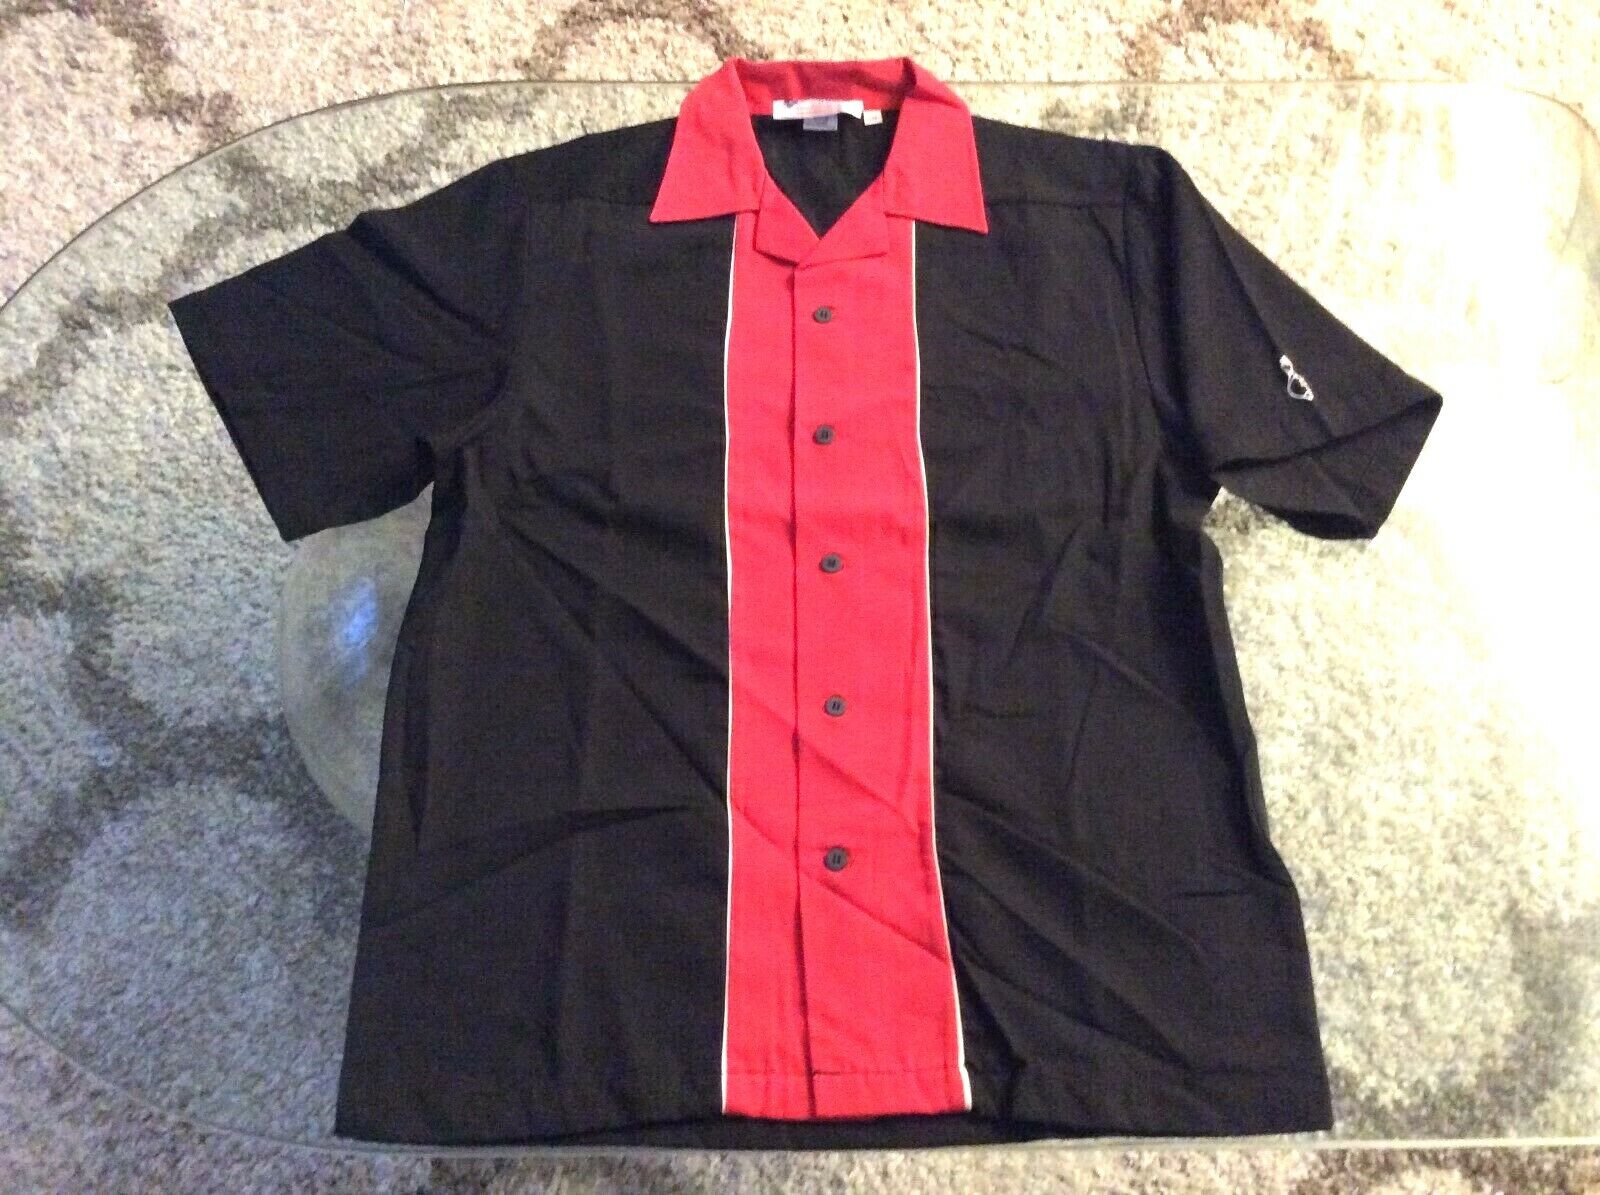 Tampa Bay Buccaneers Red & Black Bowling Shirt Adult Small-Medium 2004 Vintage